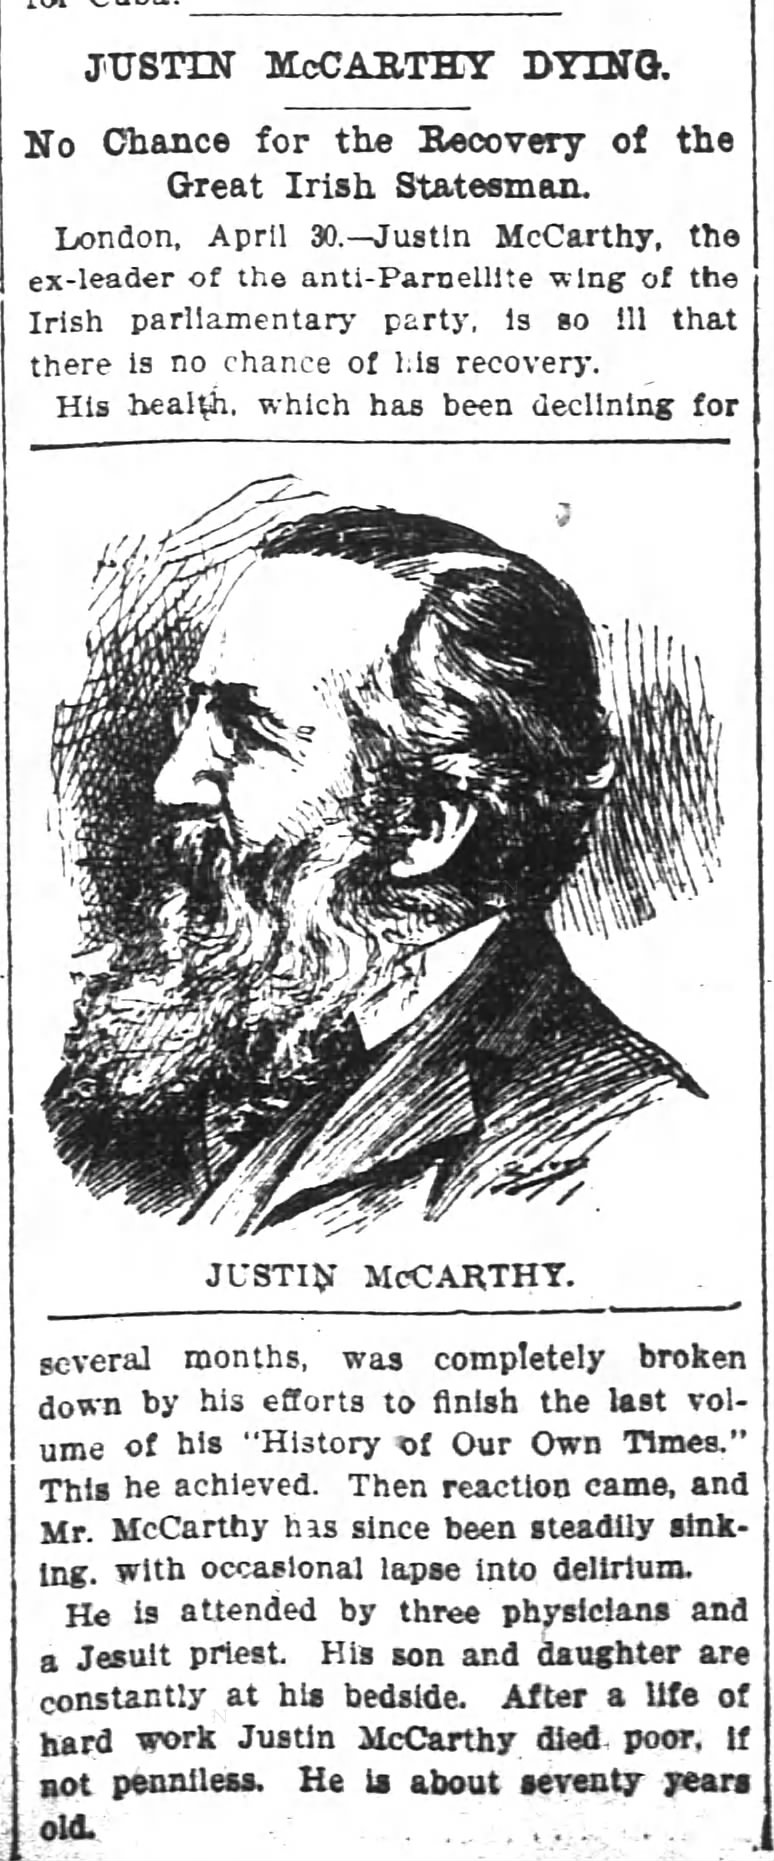 Justin McCarthy Dying